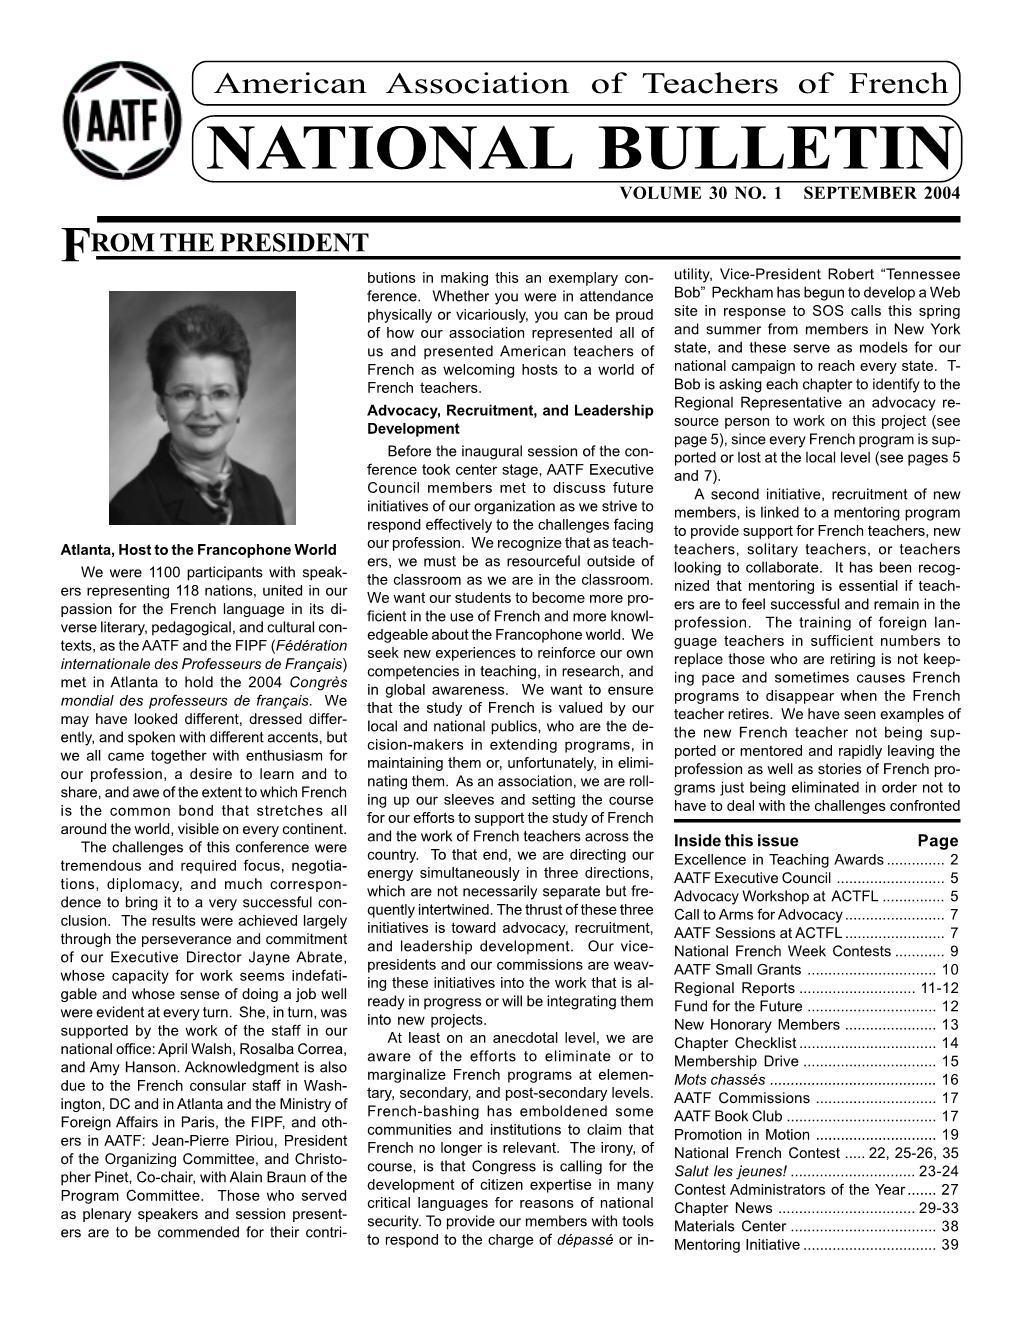 National Bulletin Volume 30 No